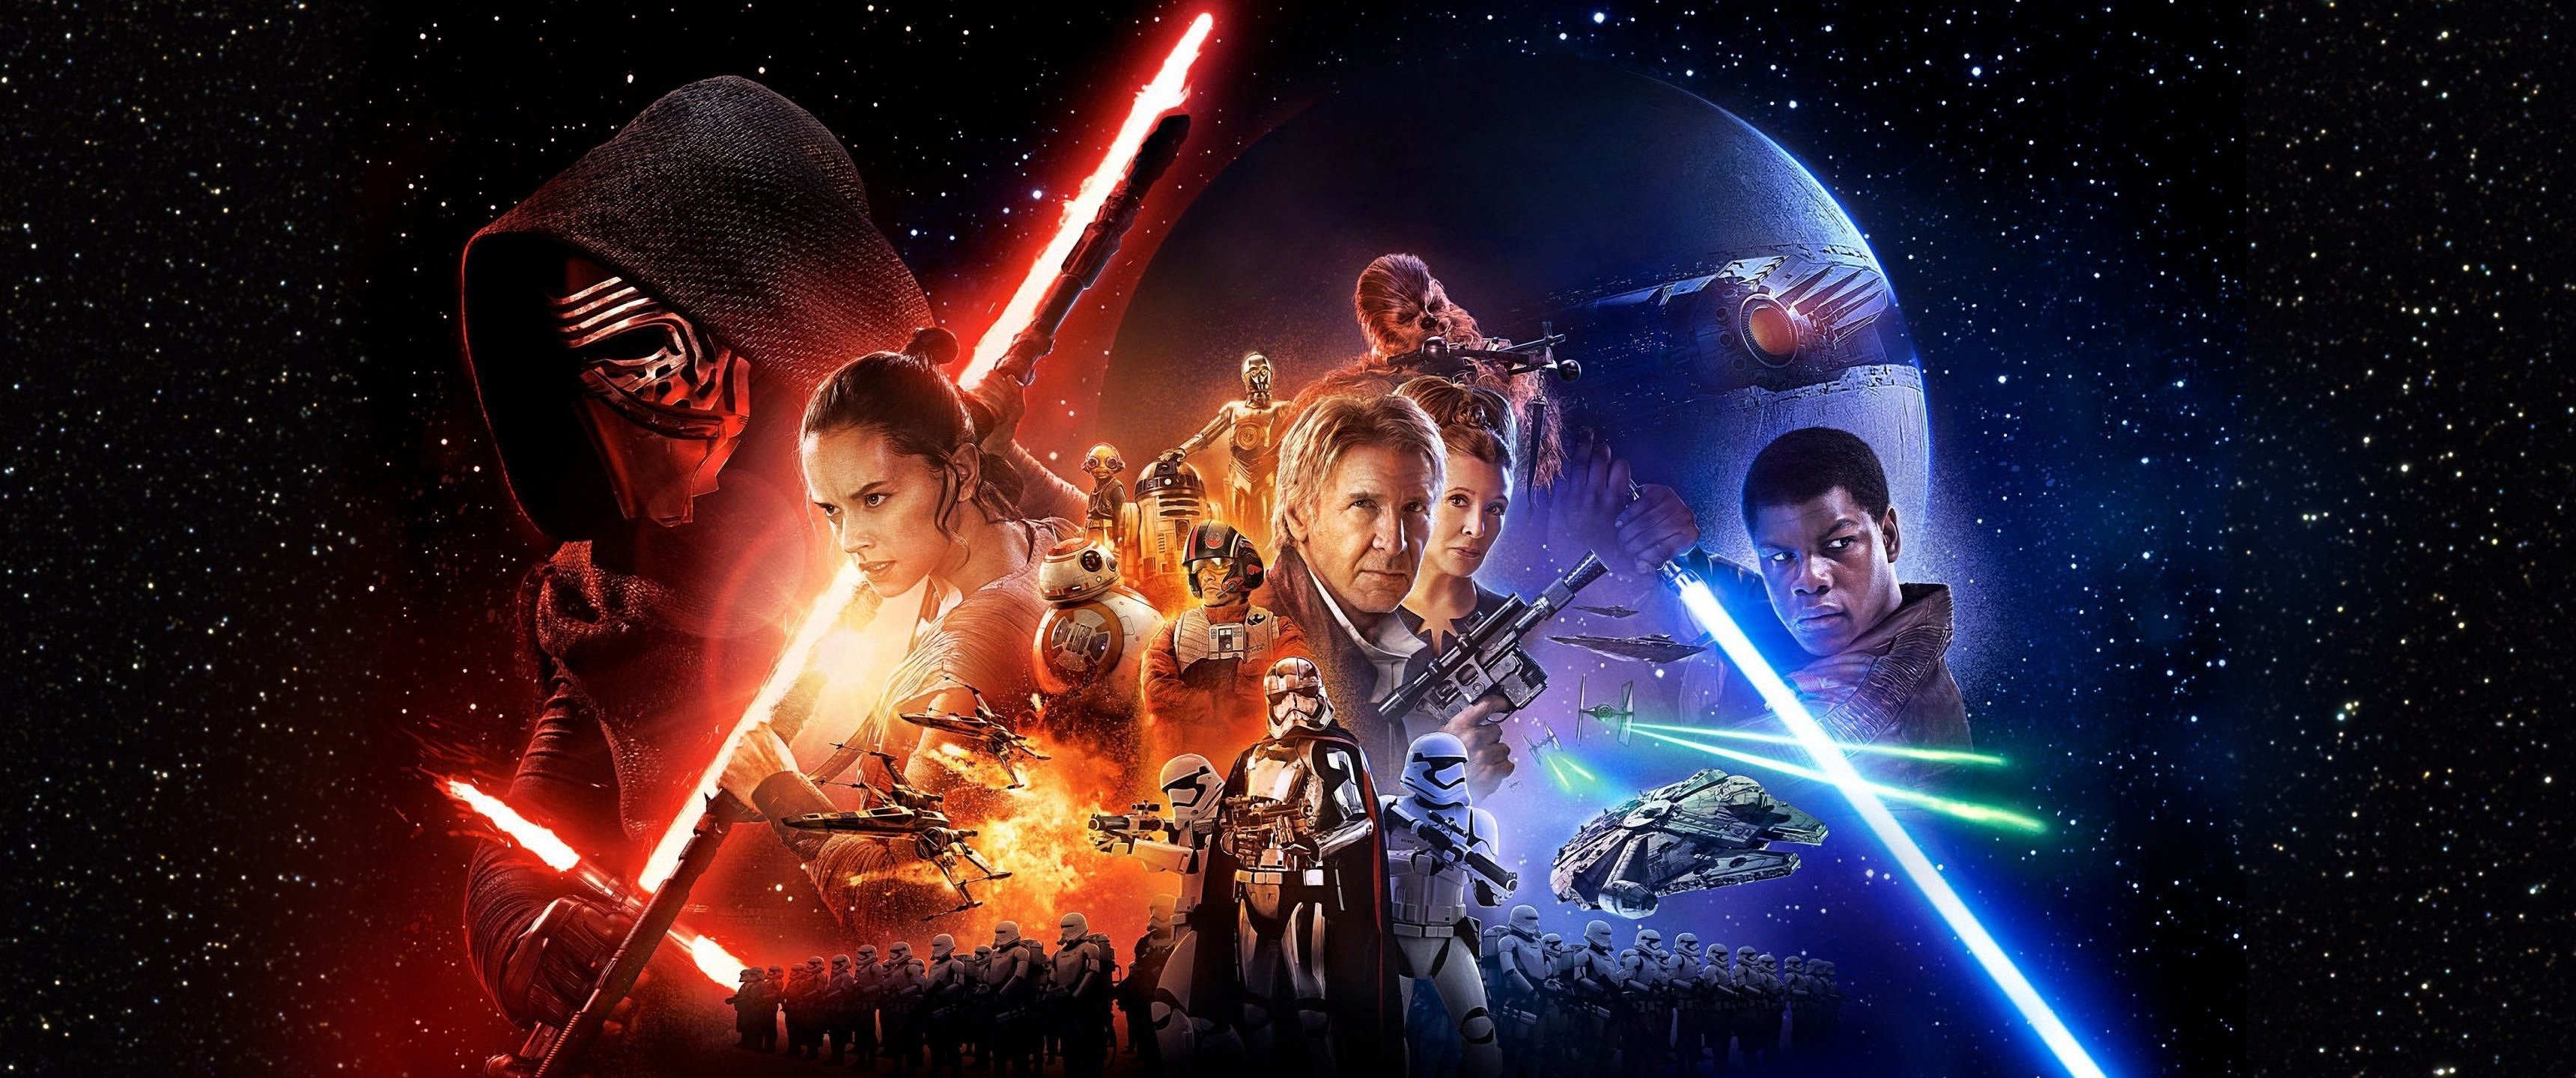 star wars the force awakens full movie english